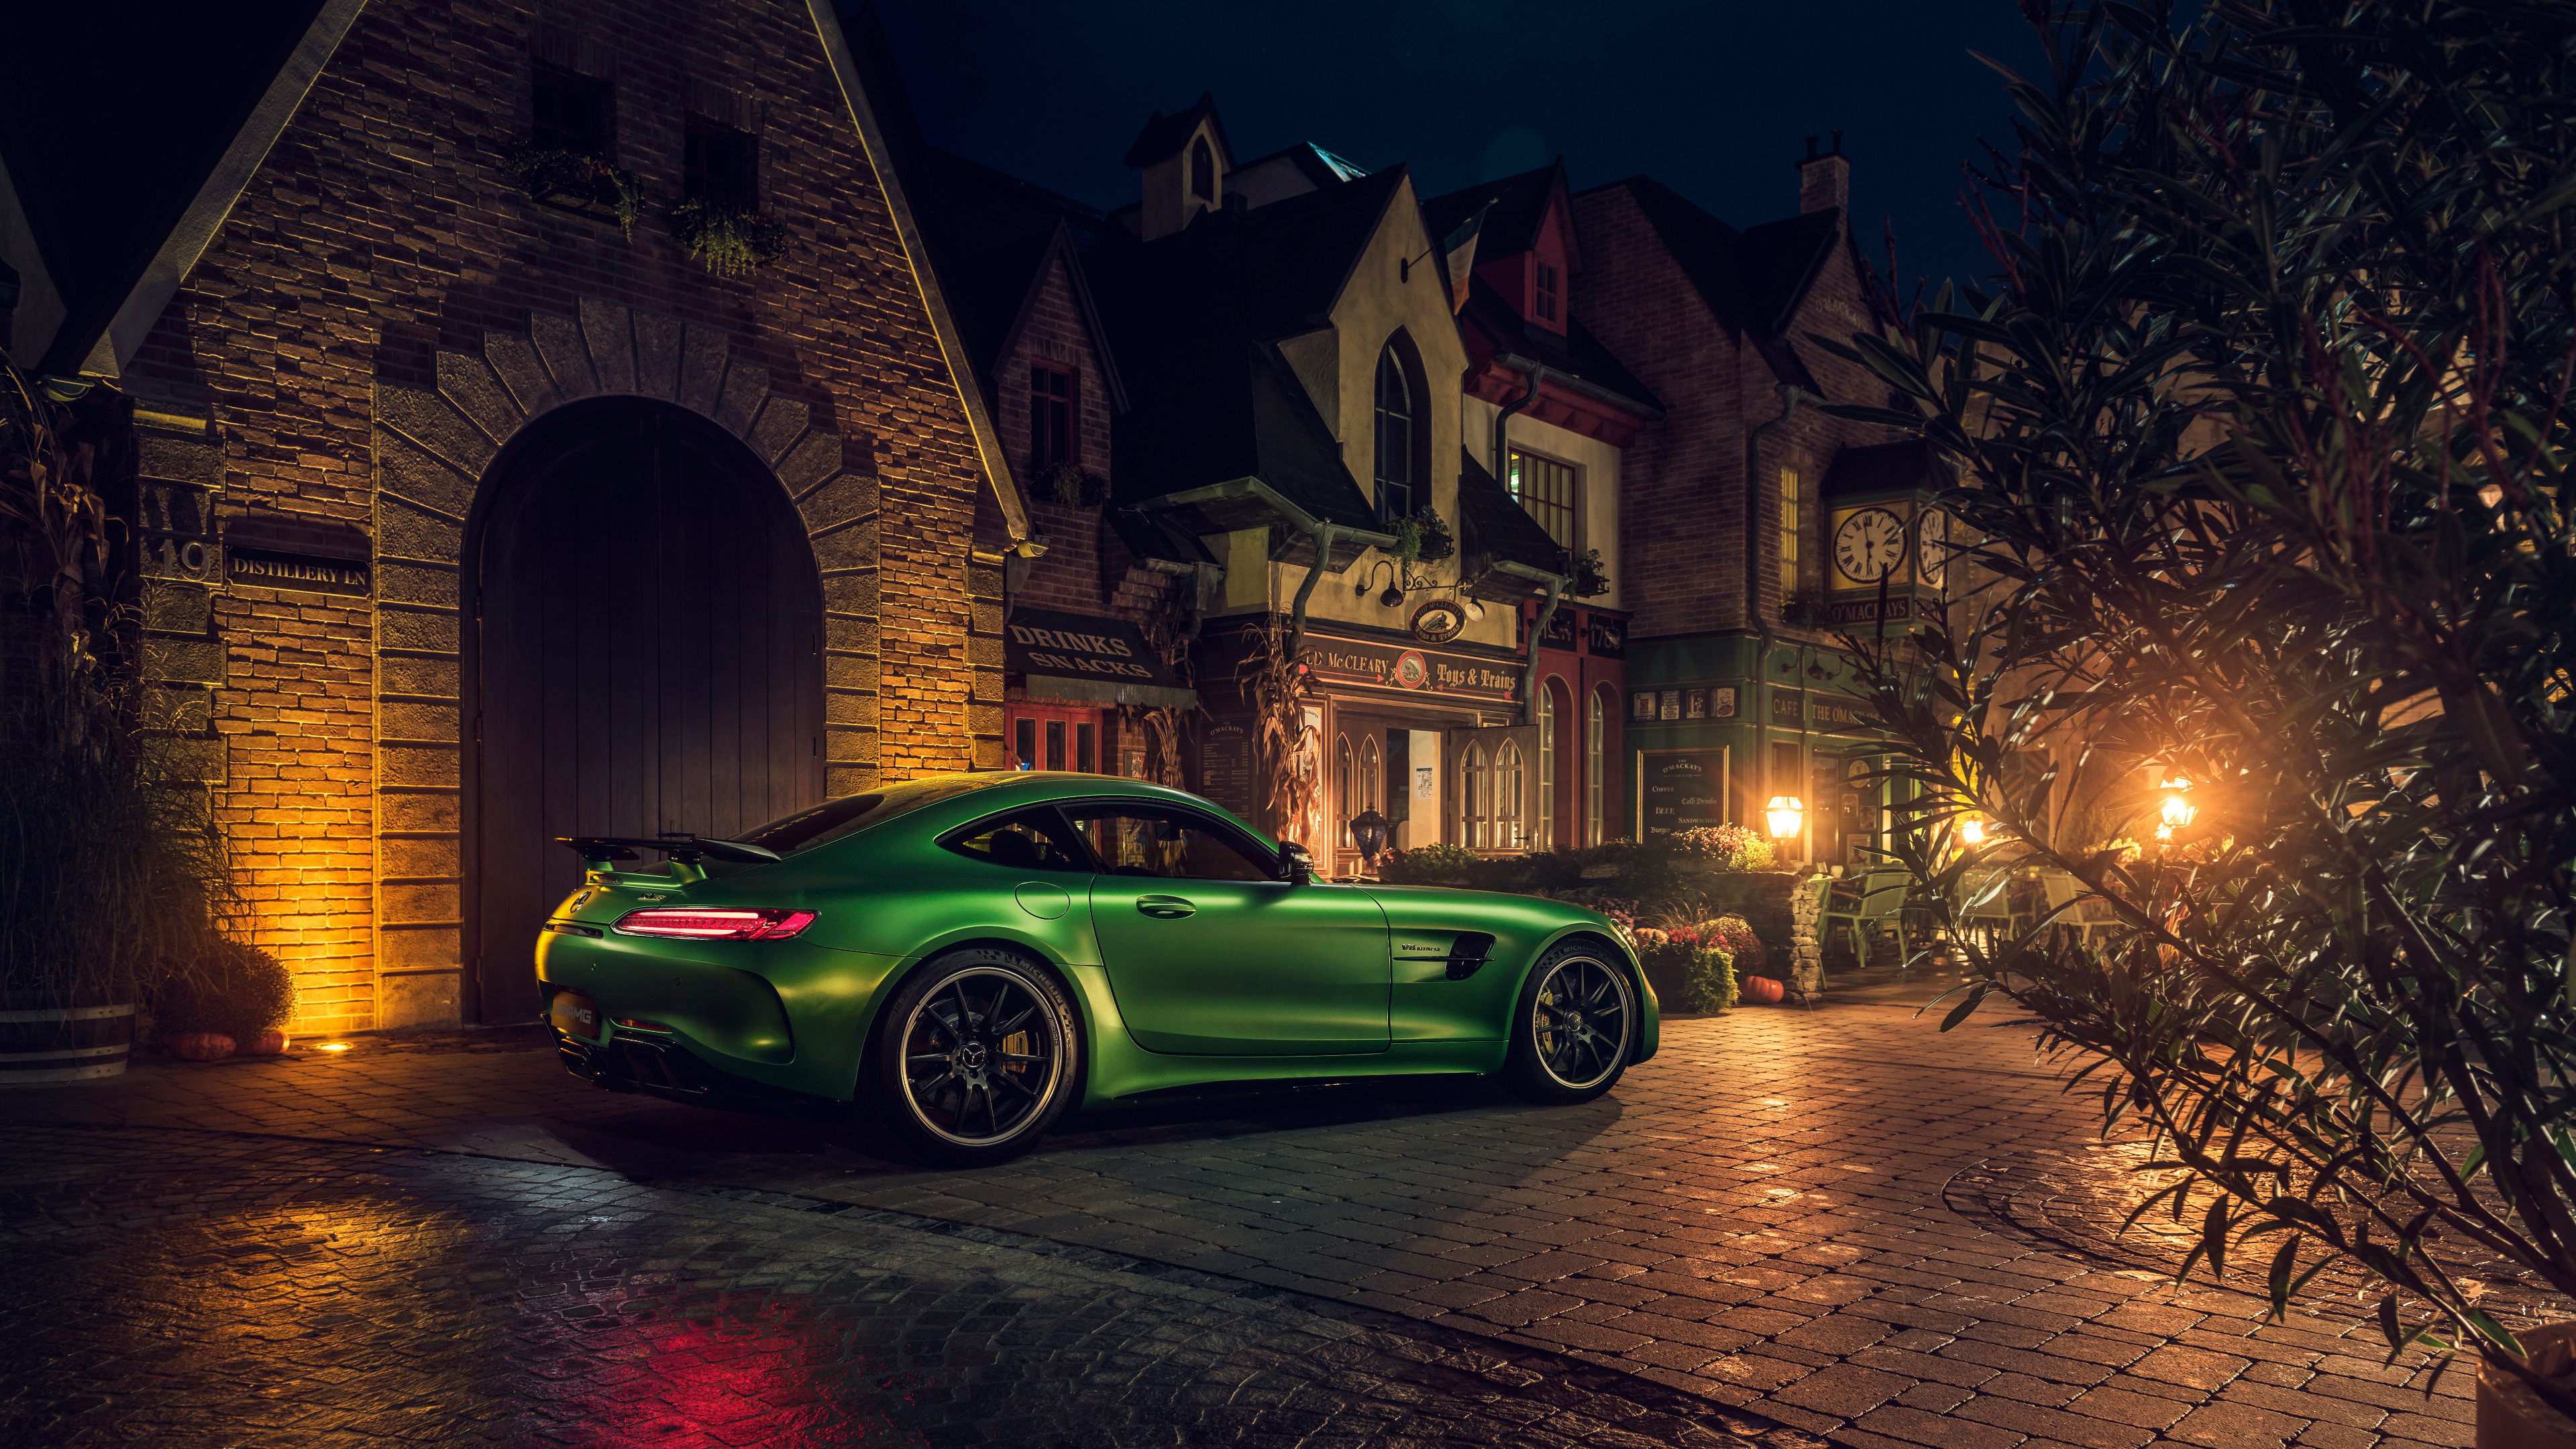 green mercedes amg gt r rear 4k 1546361533 - Green Mercedes AMG GT R Rear 4k - mercedes wallpapers, mercedes amg gtr wallpapers, hd-wallpapers, cars wallpapers, 4k-wallpapers, 2018 cars wallpapers